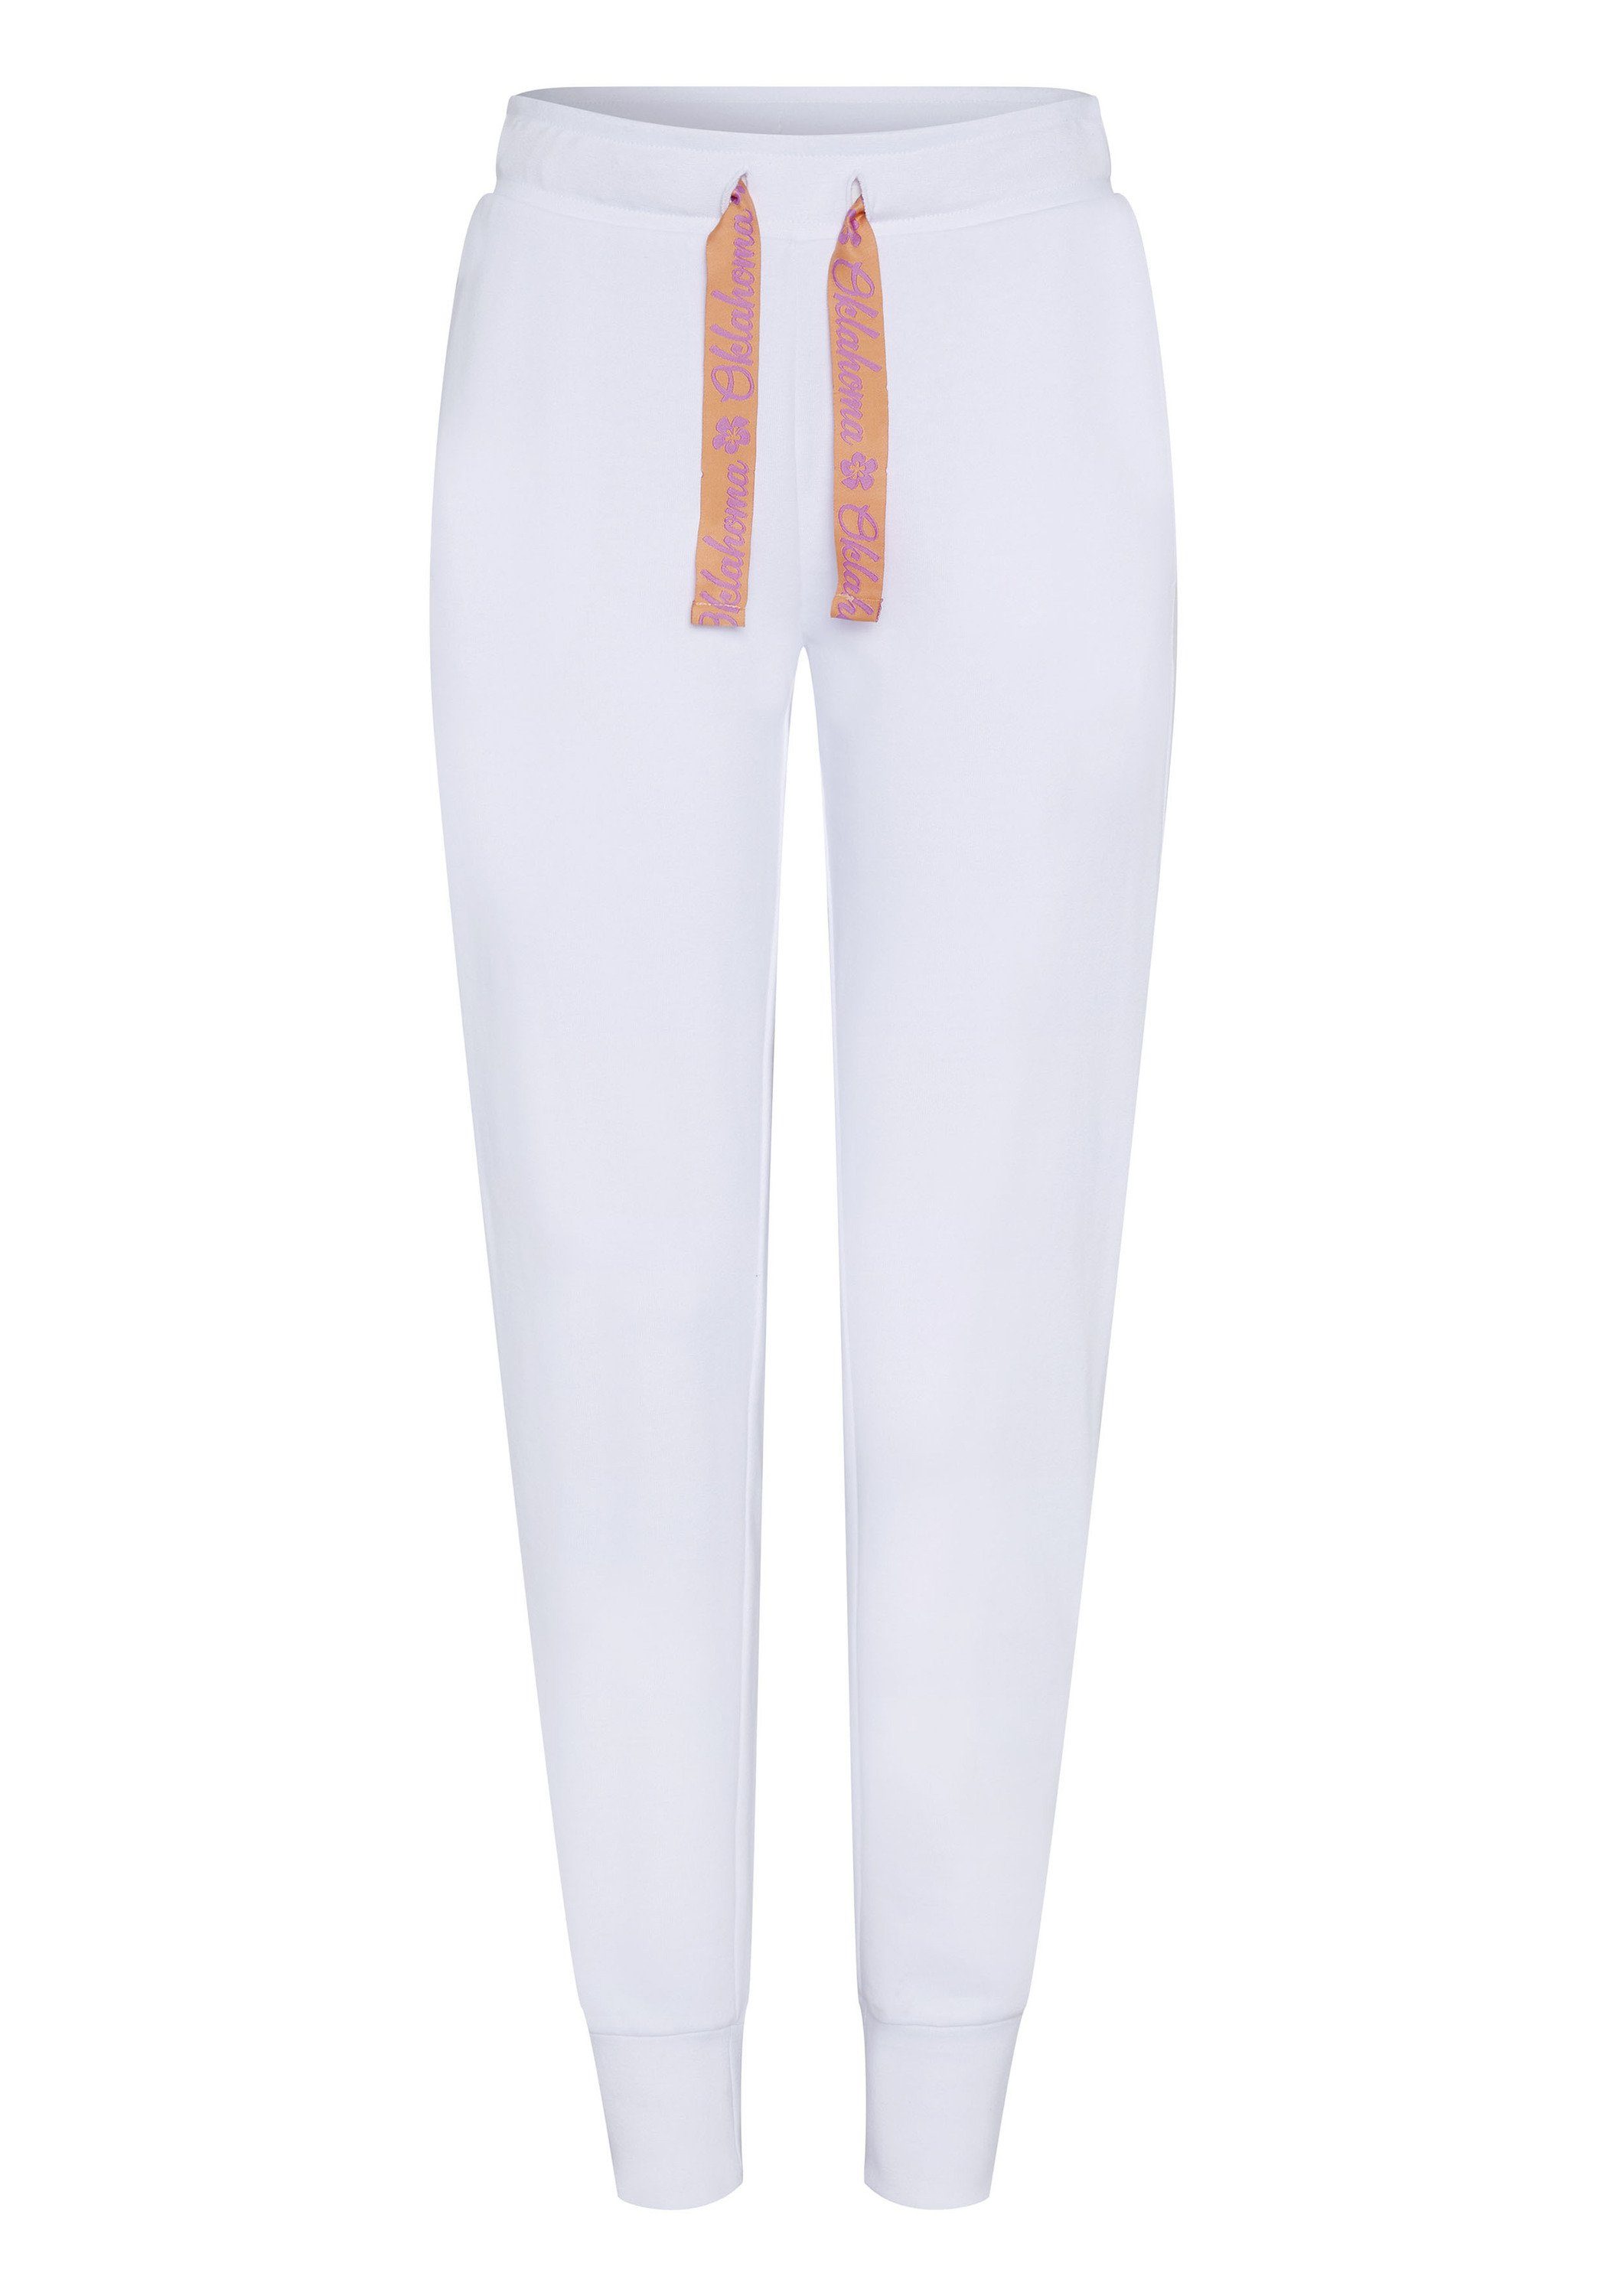 Oklahoma Jeans Sweathose in Slim Fit 11-0601 Bright White